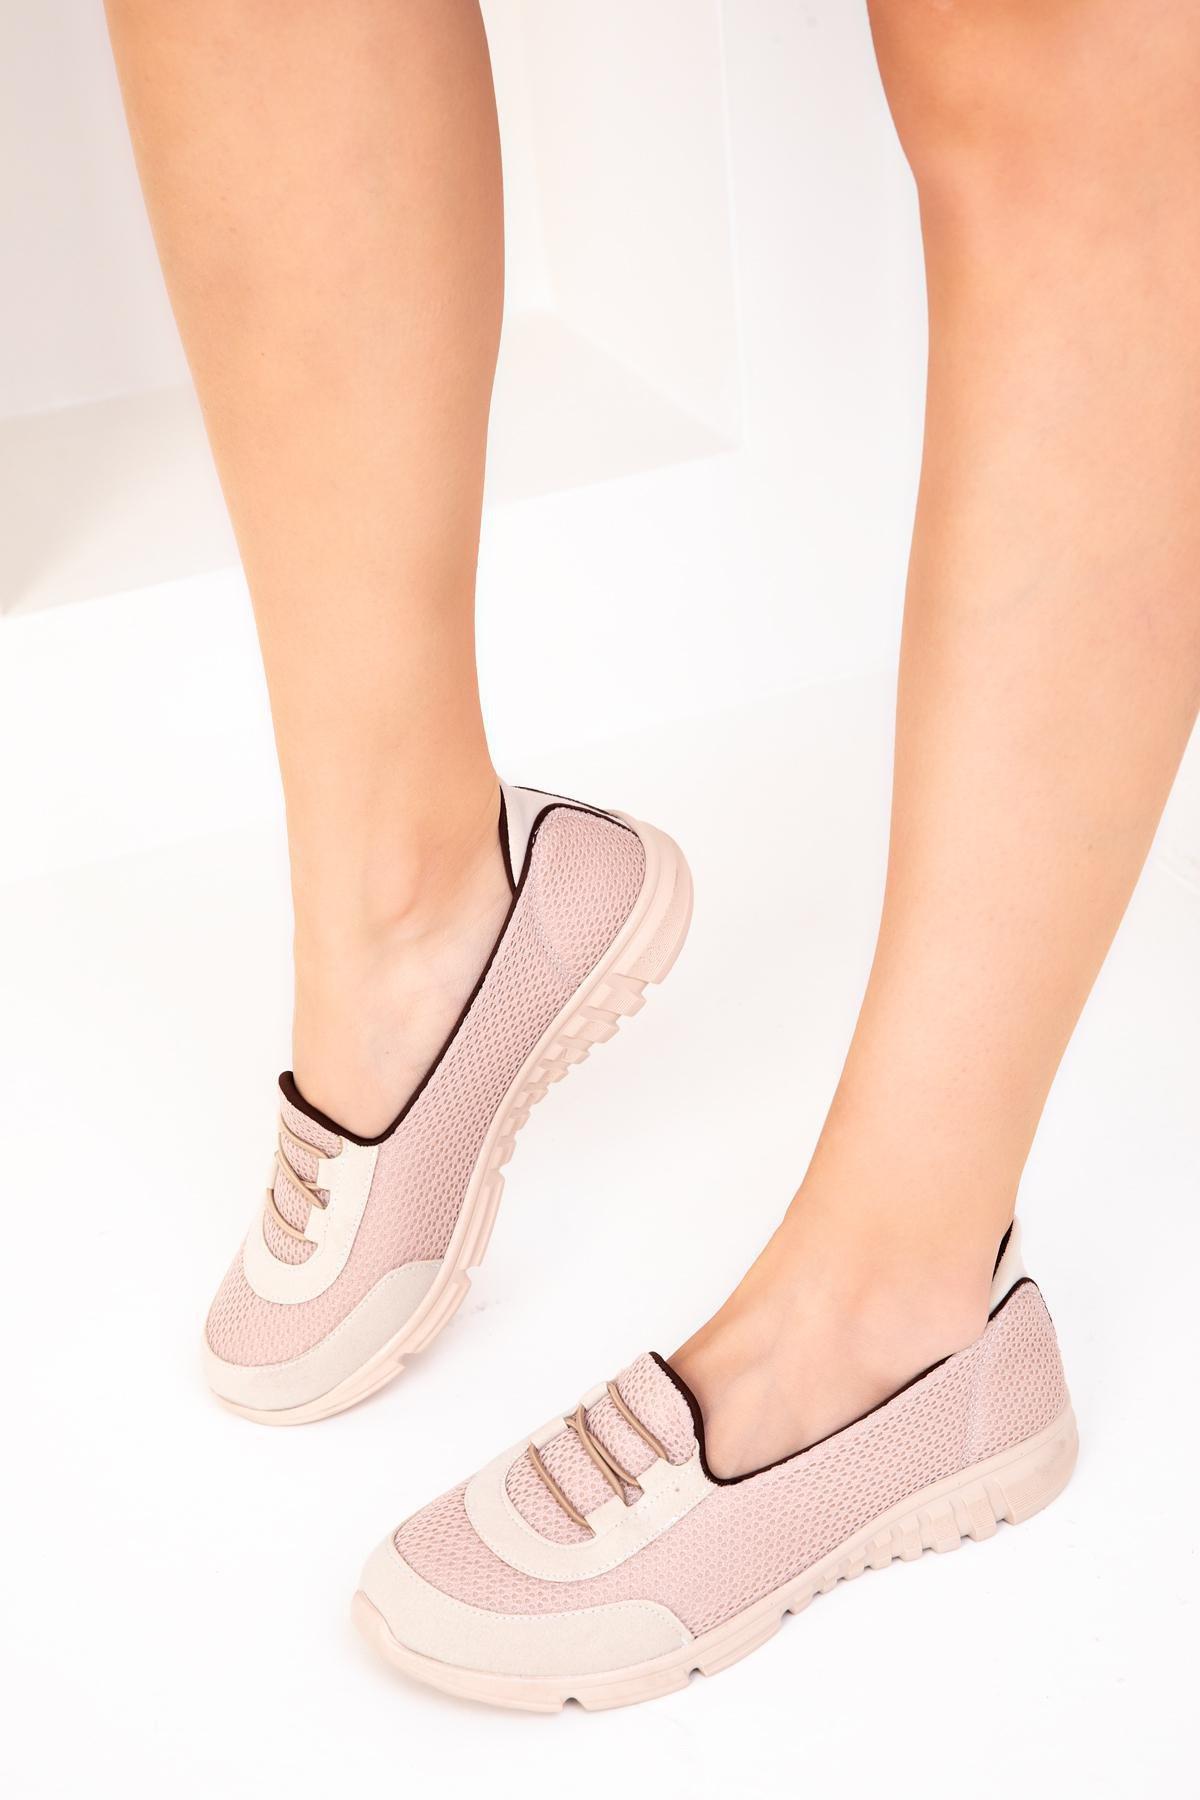 SOHO - Beige Slip-On Casual Shoes